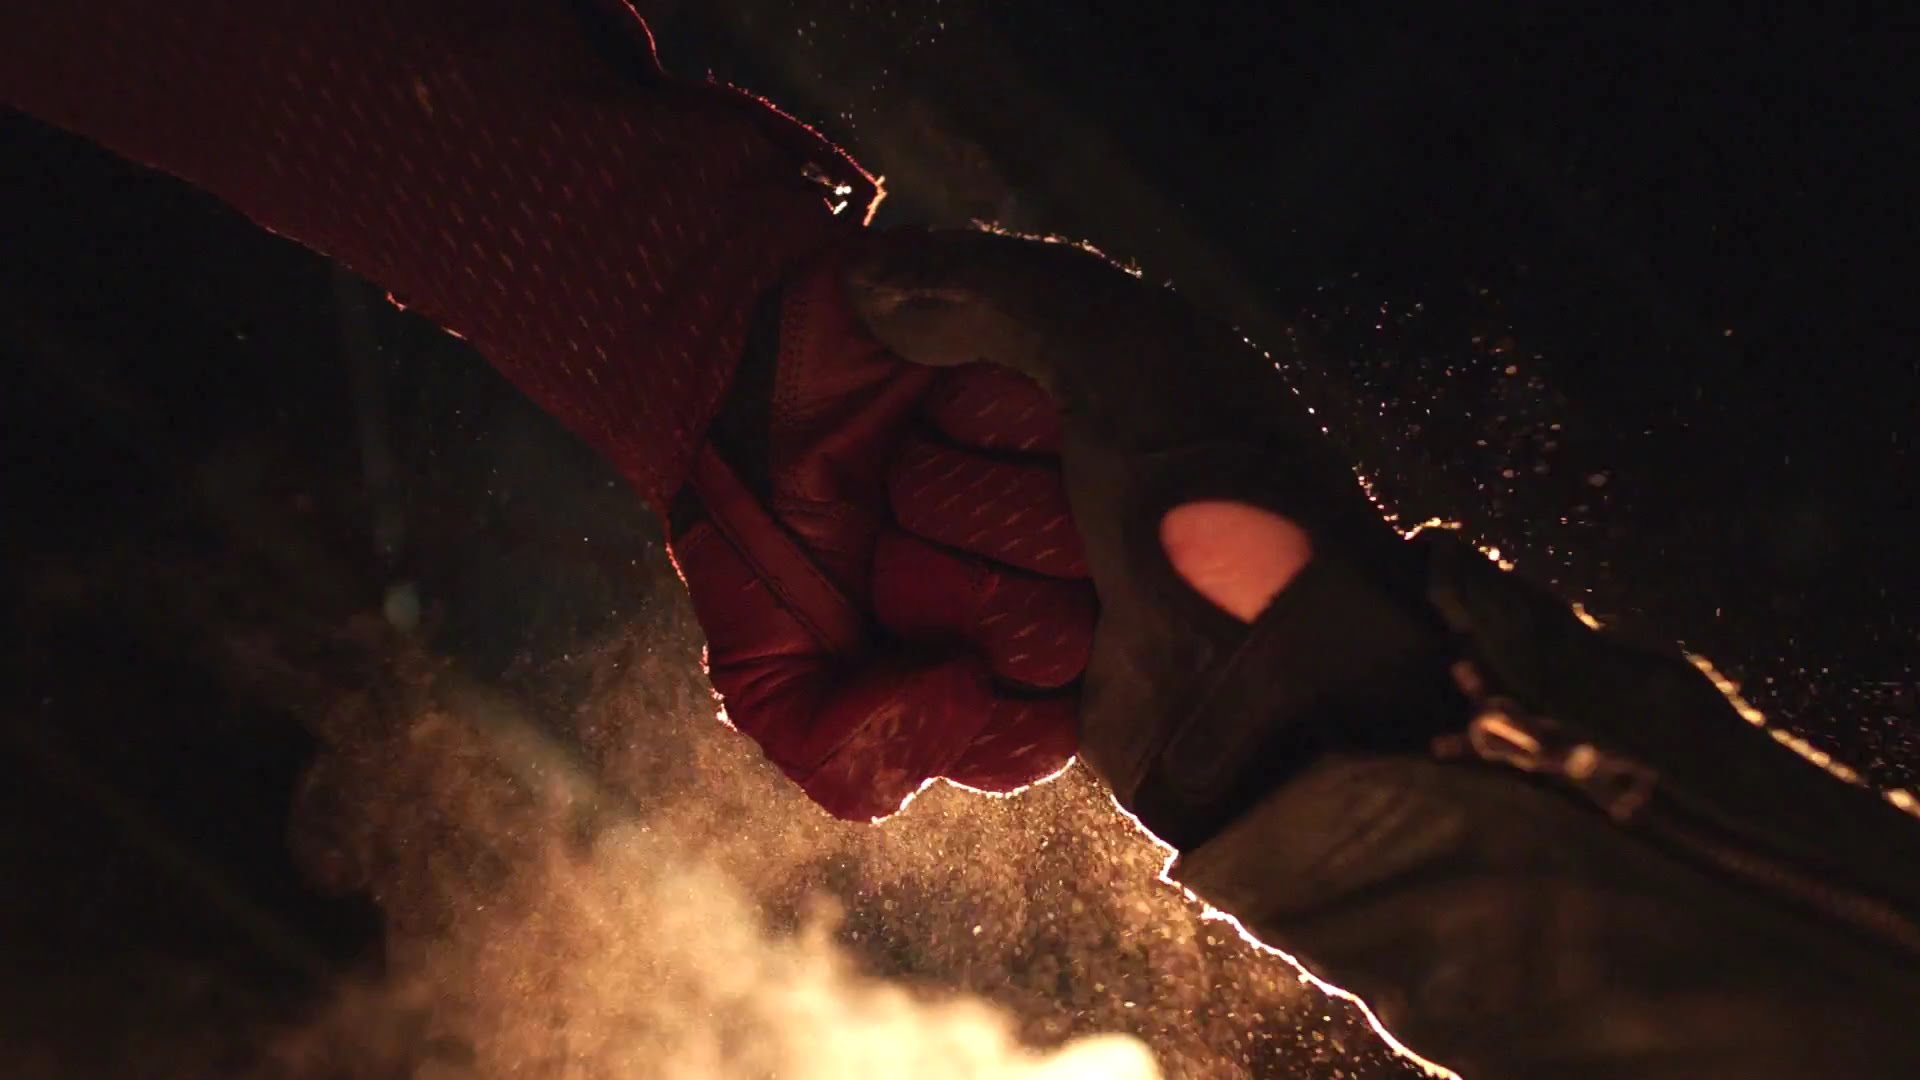 The Flash Vs Arrow Trailer